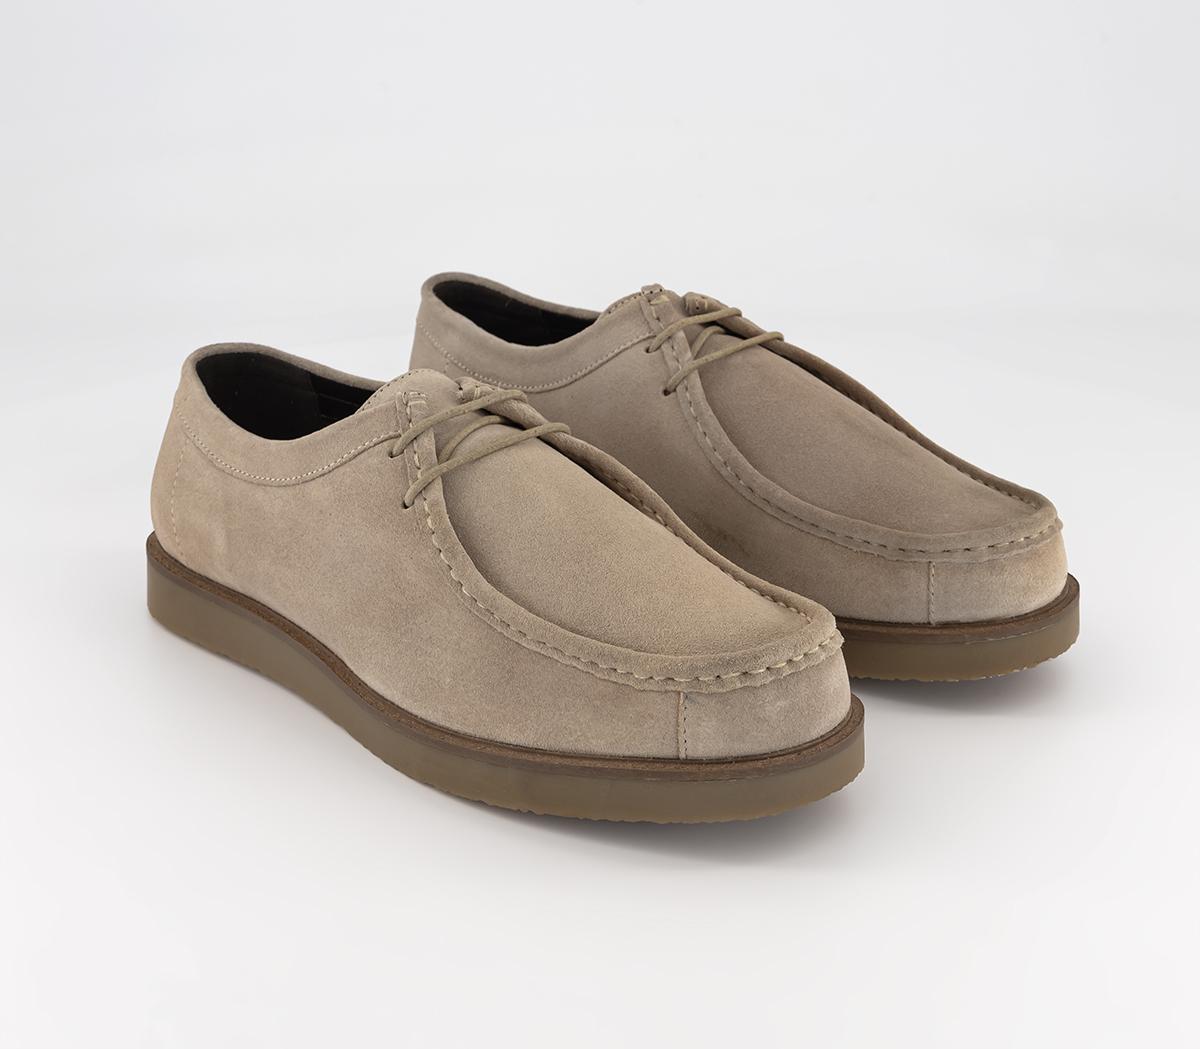 OFFICE Mens Carter Stitch Apron Desert Shoes Beige Suede Natural, 7